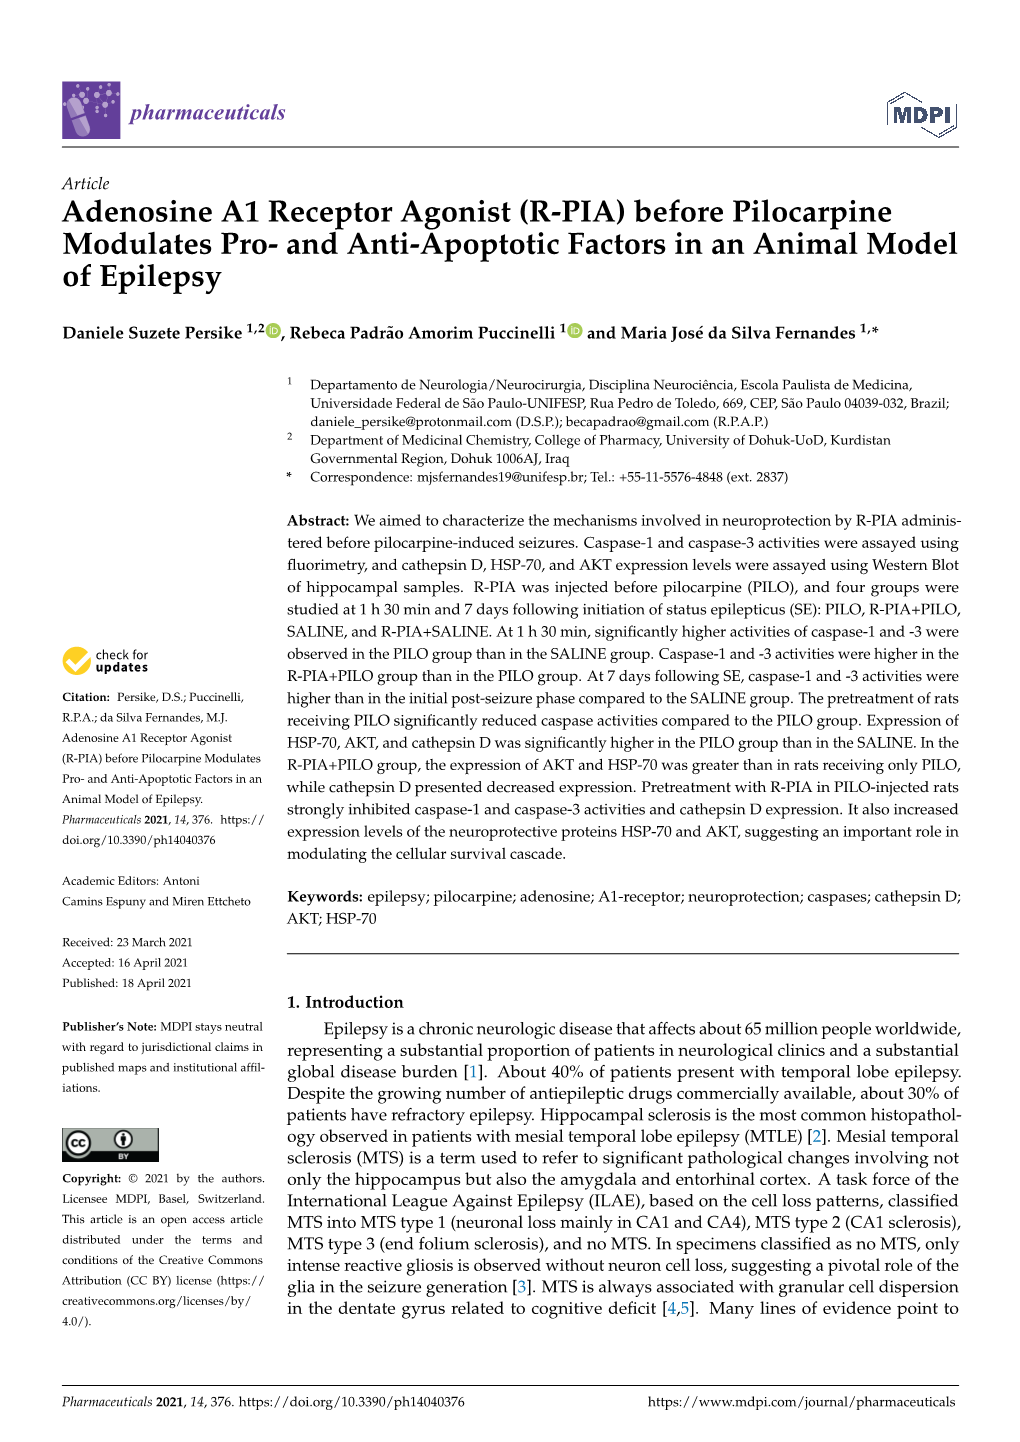 Adenosine A1 Receptor Agonist (R-PIA) Before Pilocarpine Modulates Pro- and Anti-Apoptotic Factors in an Animal Model of Epilepsy